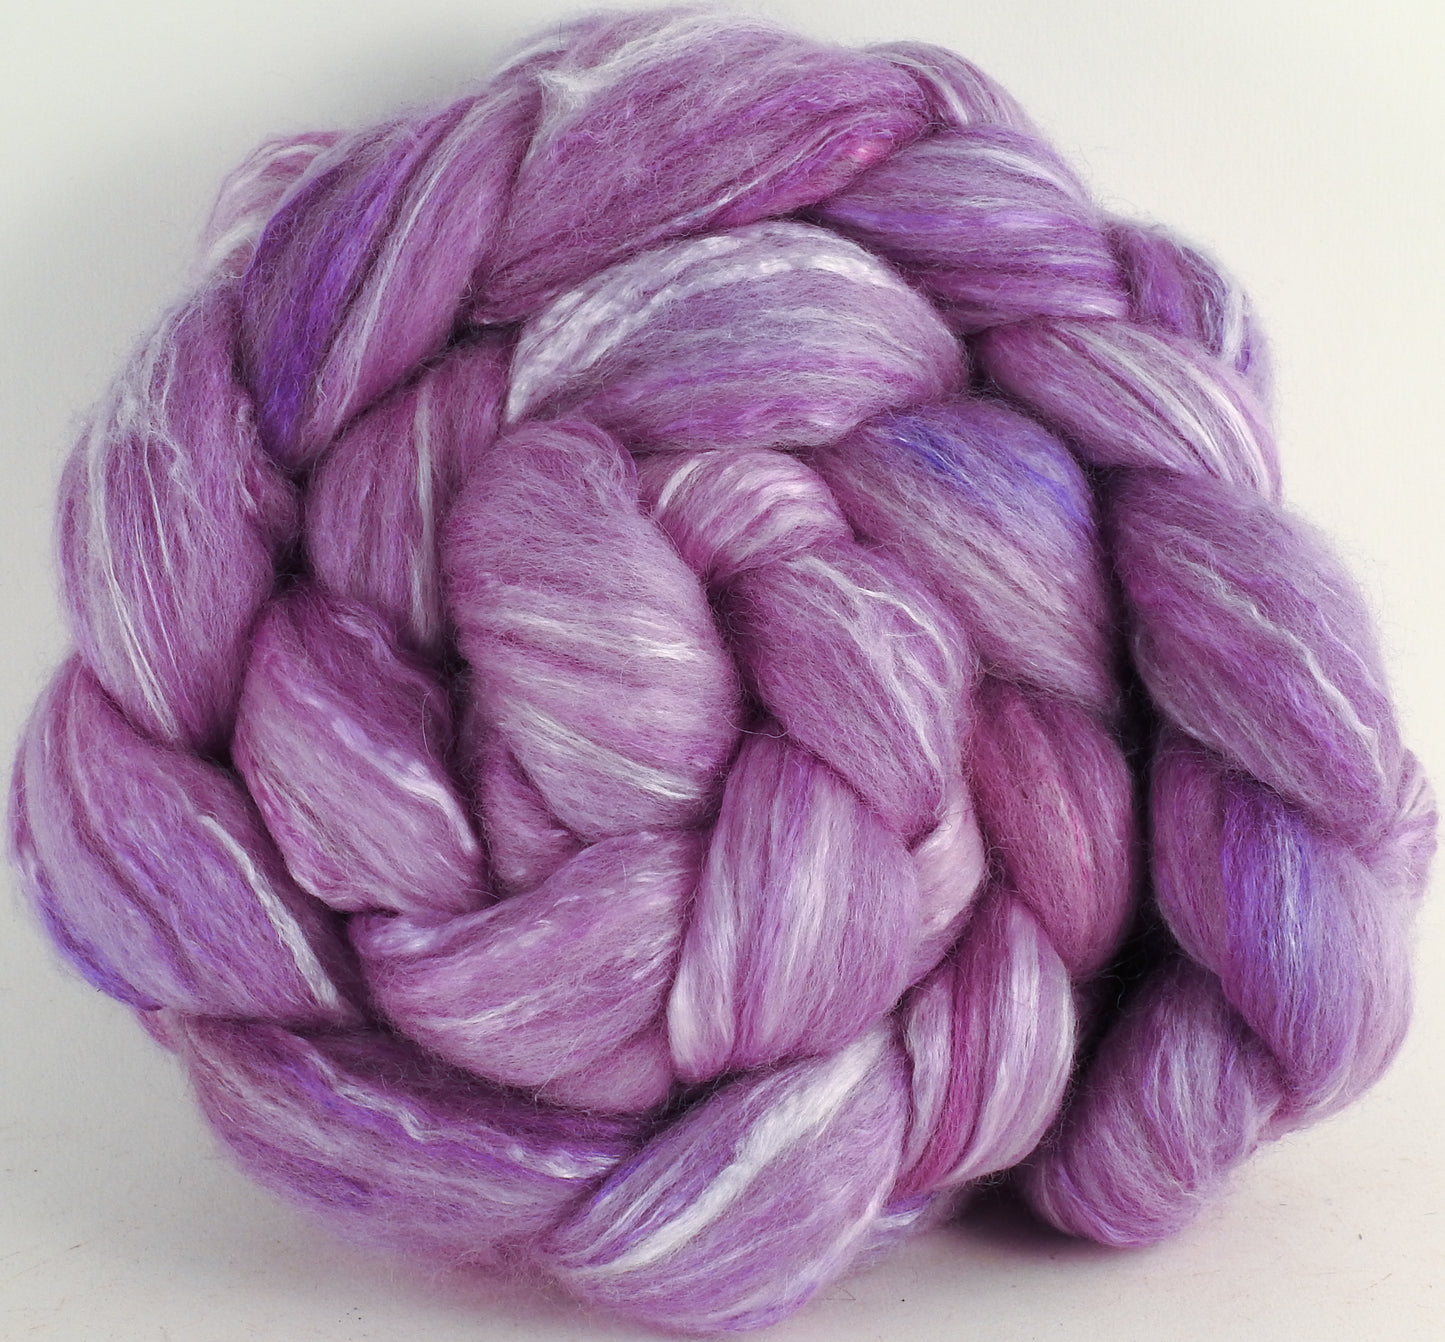 Batt in a Braid #45 - Evening Primrose (5.8 oz.) - Corriedale/Mulberry Silk/Rose Fiber (60/20/20) - Inglenook Fibers